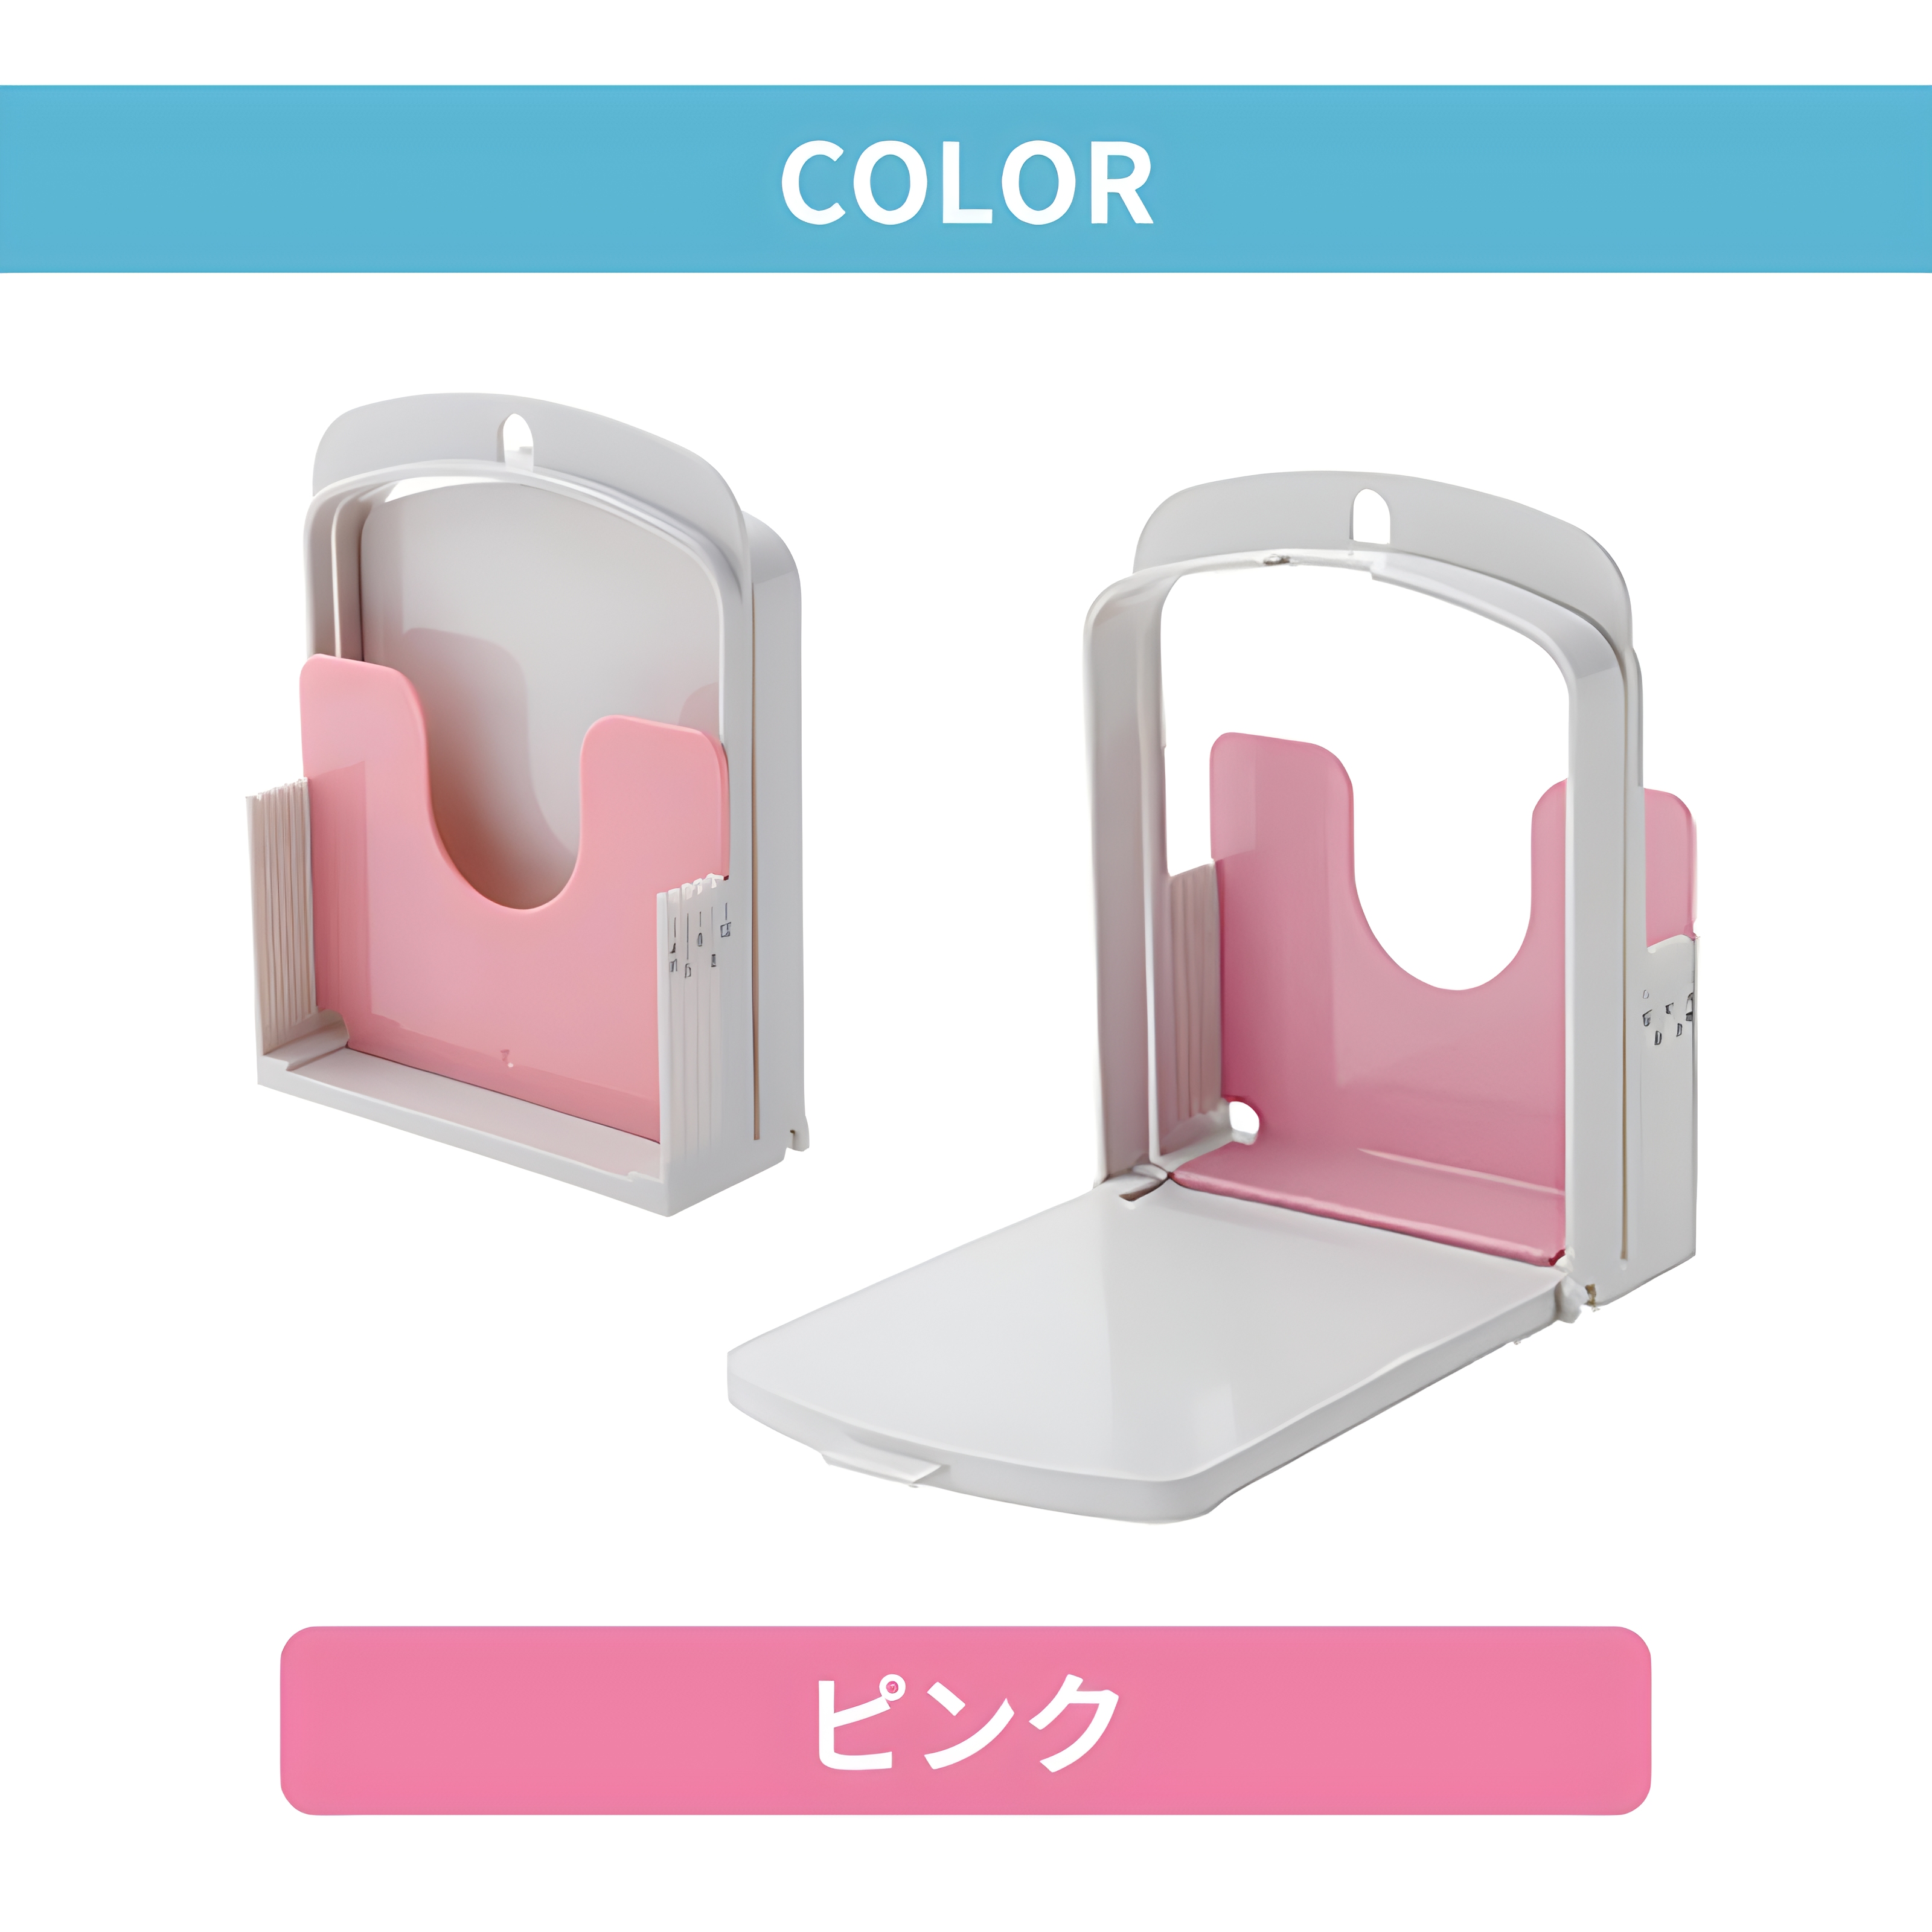 ISETO 日本进口面包切片器厨房烘焙用具切面包器浅蓝色粉红色详情图5